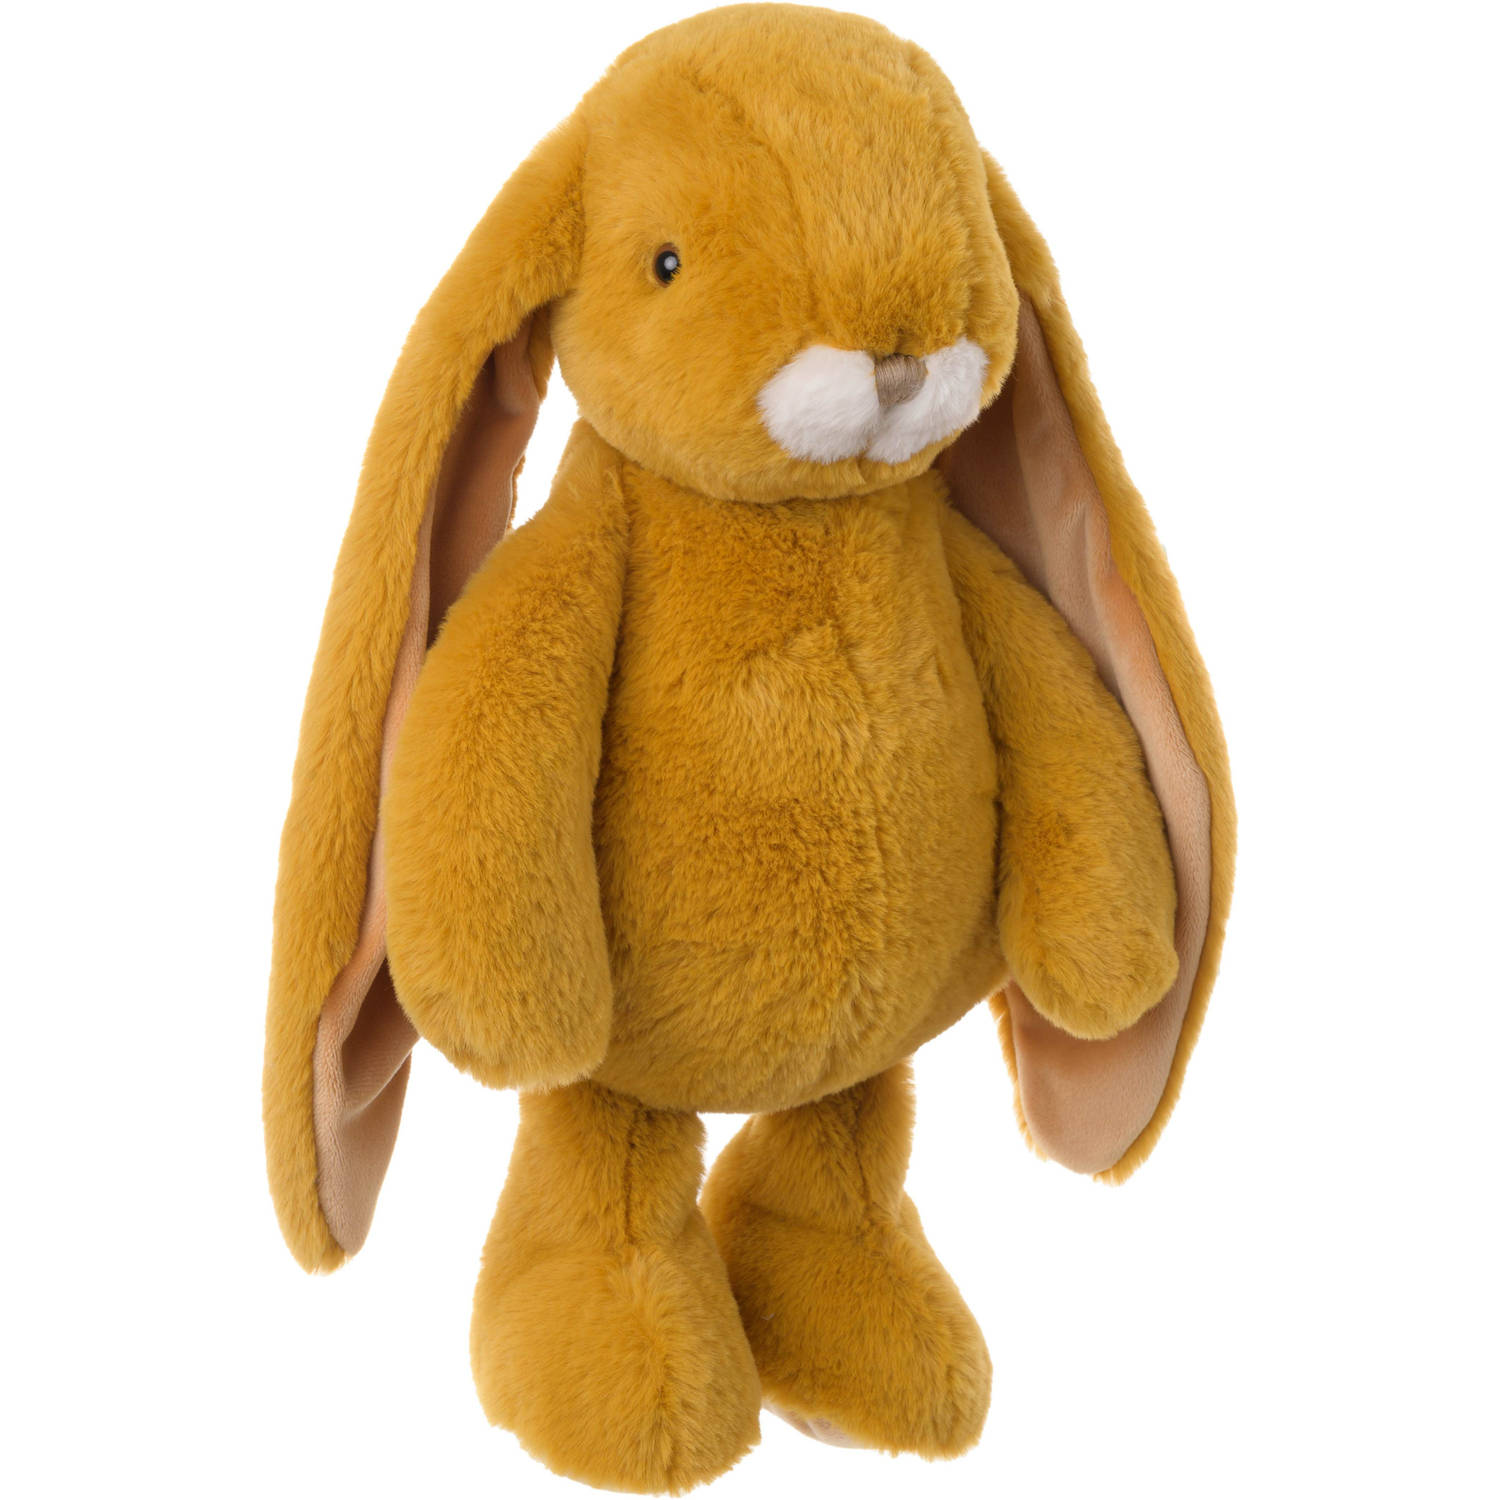 Bukowski pluche konijn knuffeldier - dark okergeel - staand - 40 cm - Luxe kwaliteit knuffels